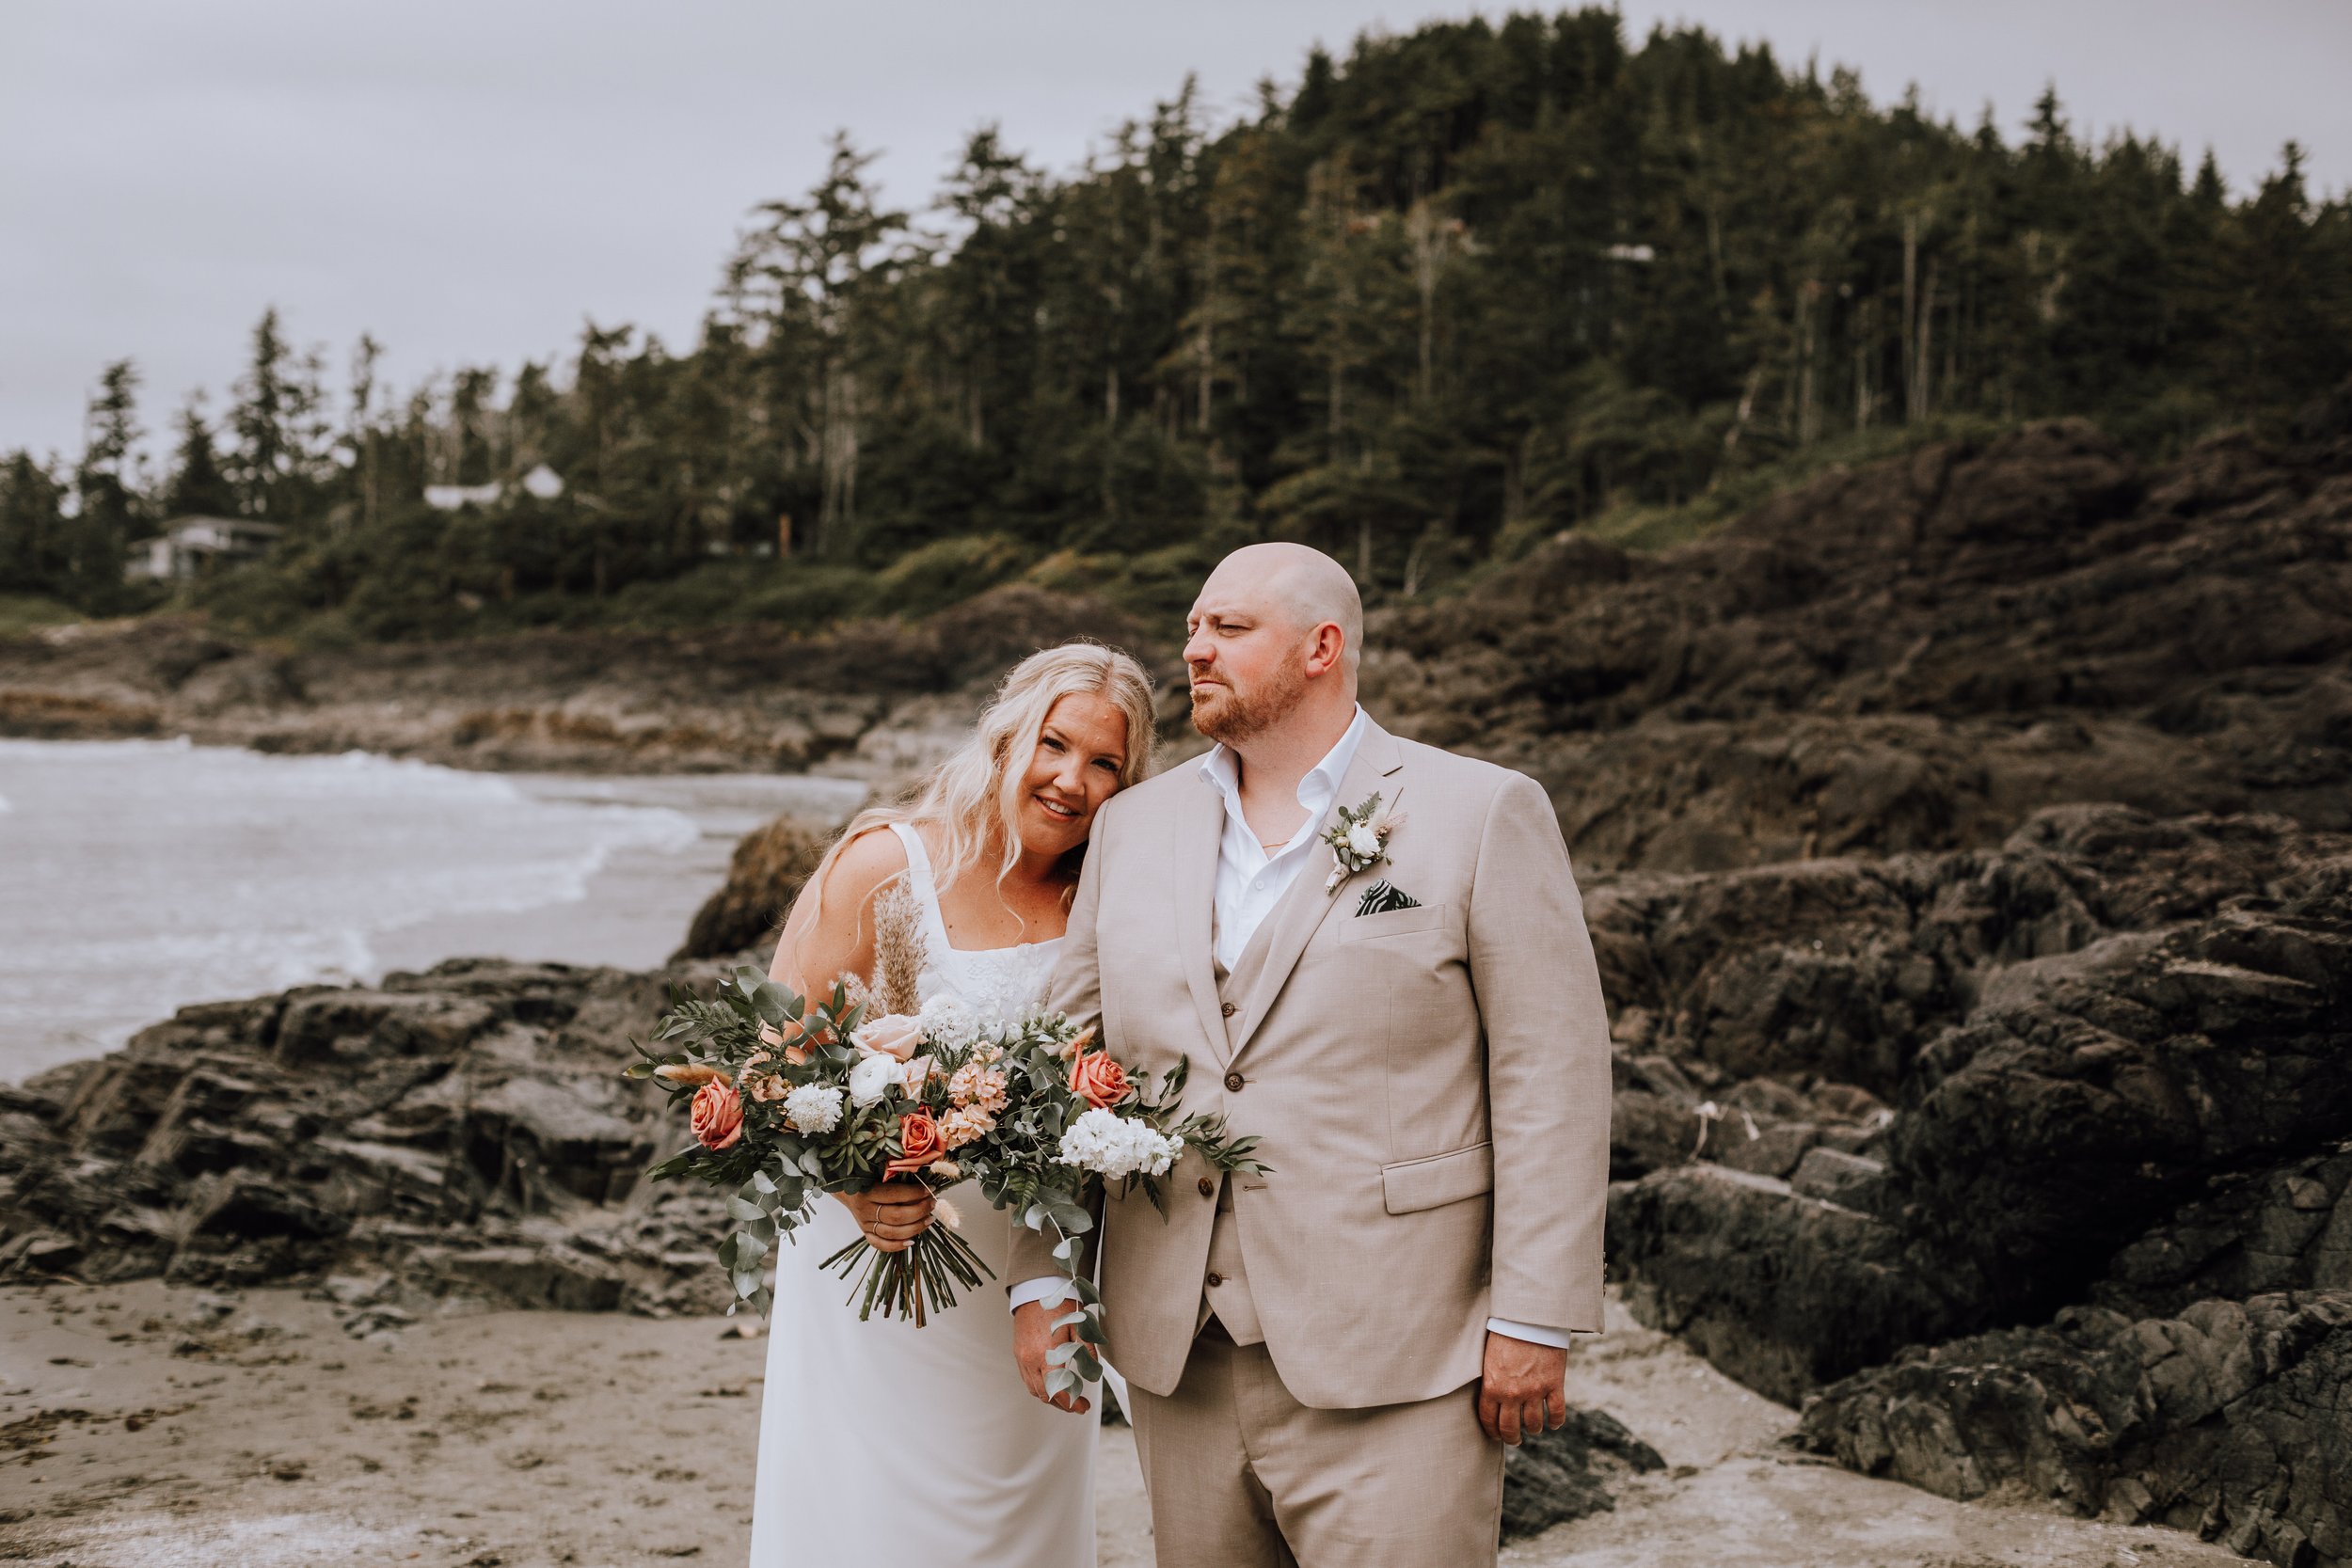 Jamie and Brad Wedding - Tofino Vancouver Island British Columbia - Elyse Anna Photography-9230.jpg